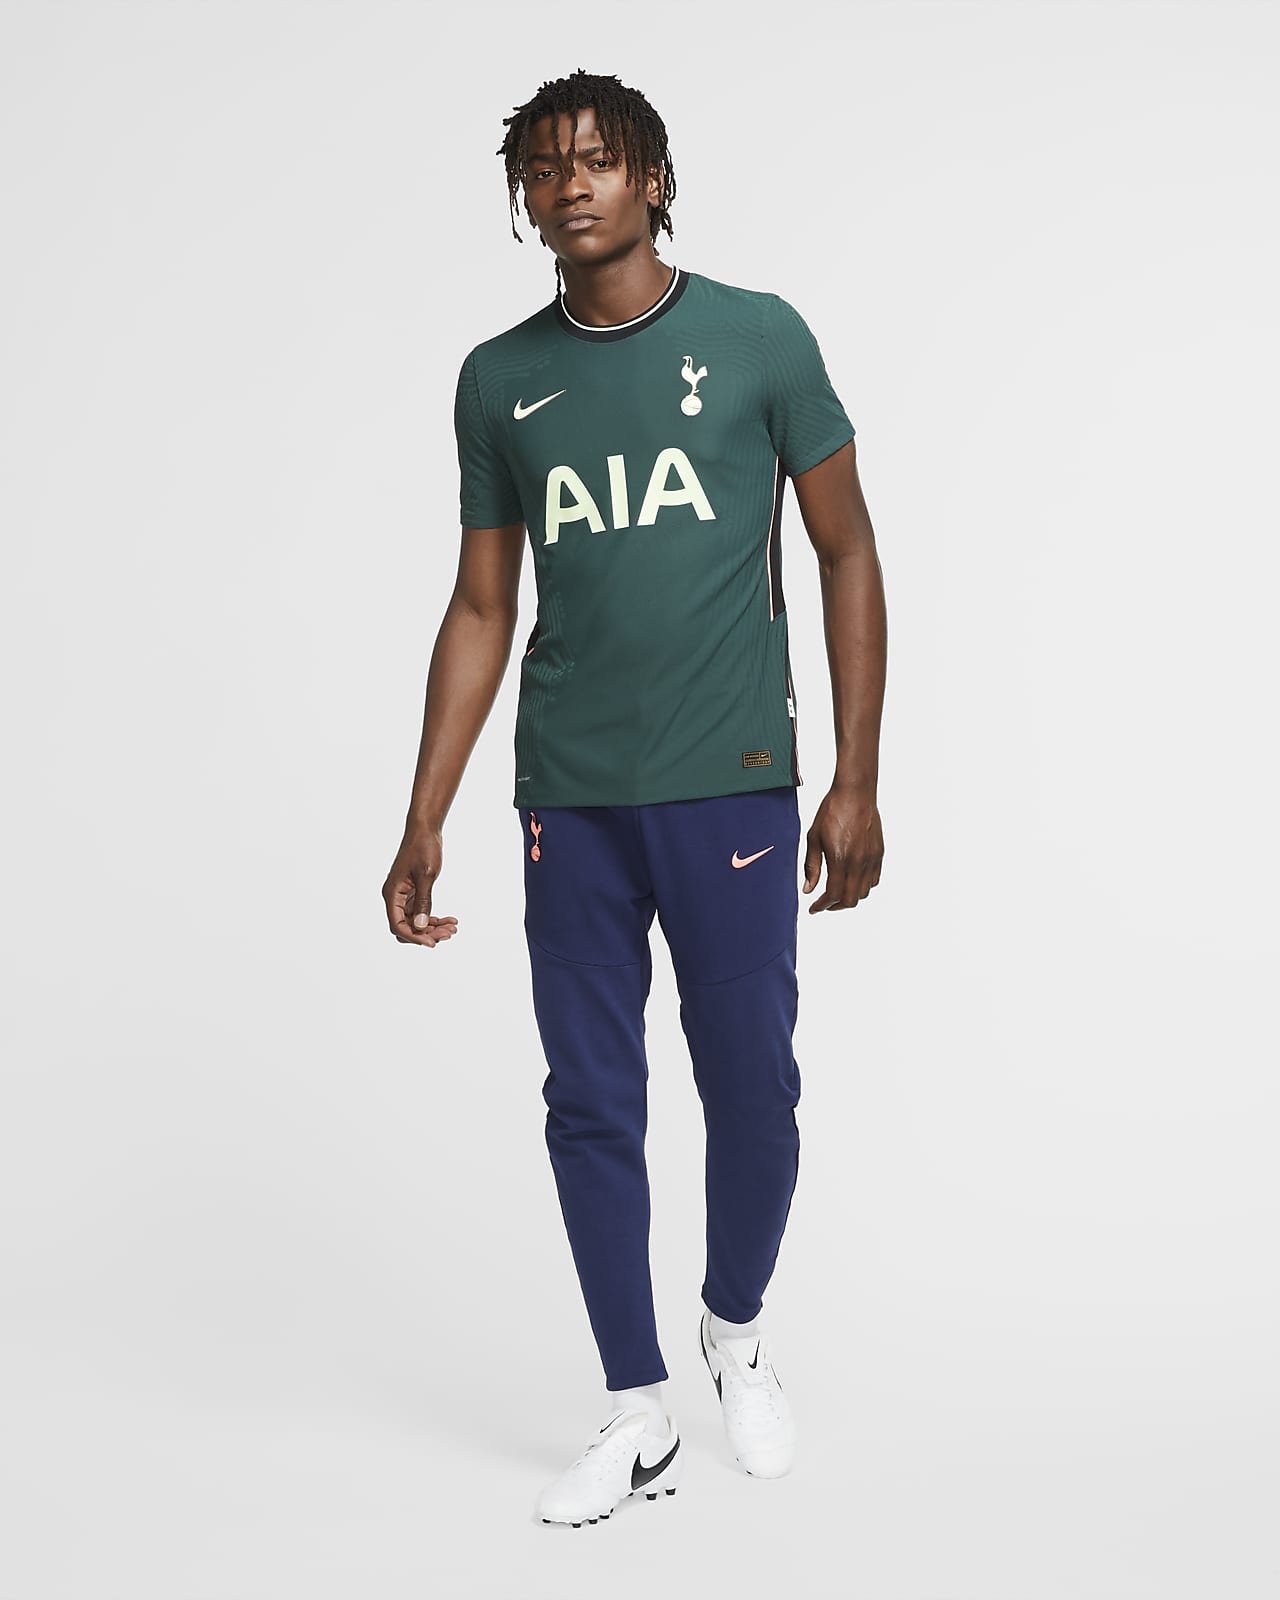 Get   Tottenham Hotspur Away Kit 2020/21 Wallpaper